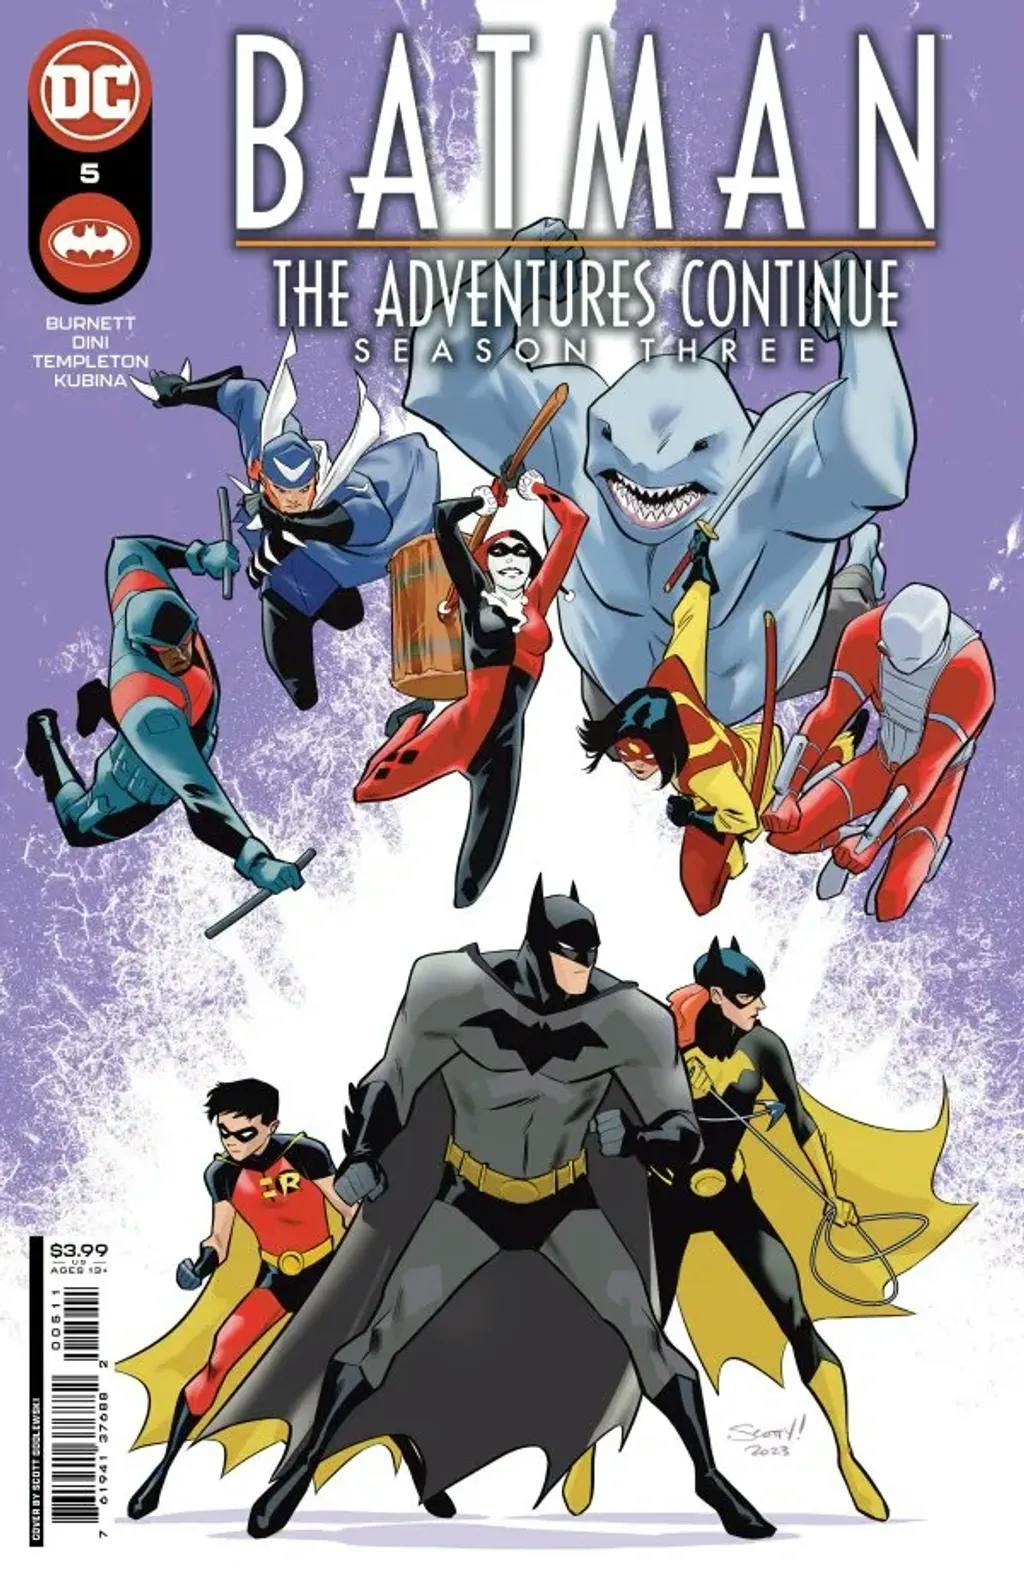 Batman: The Adventures Continue Season Three #5